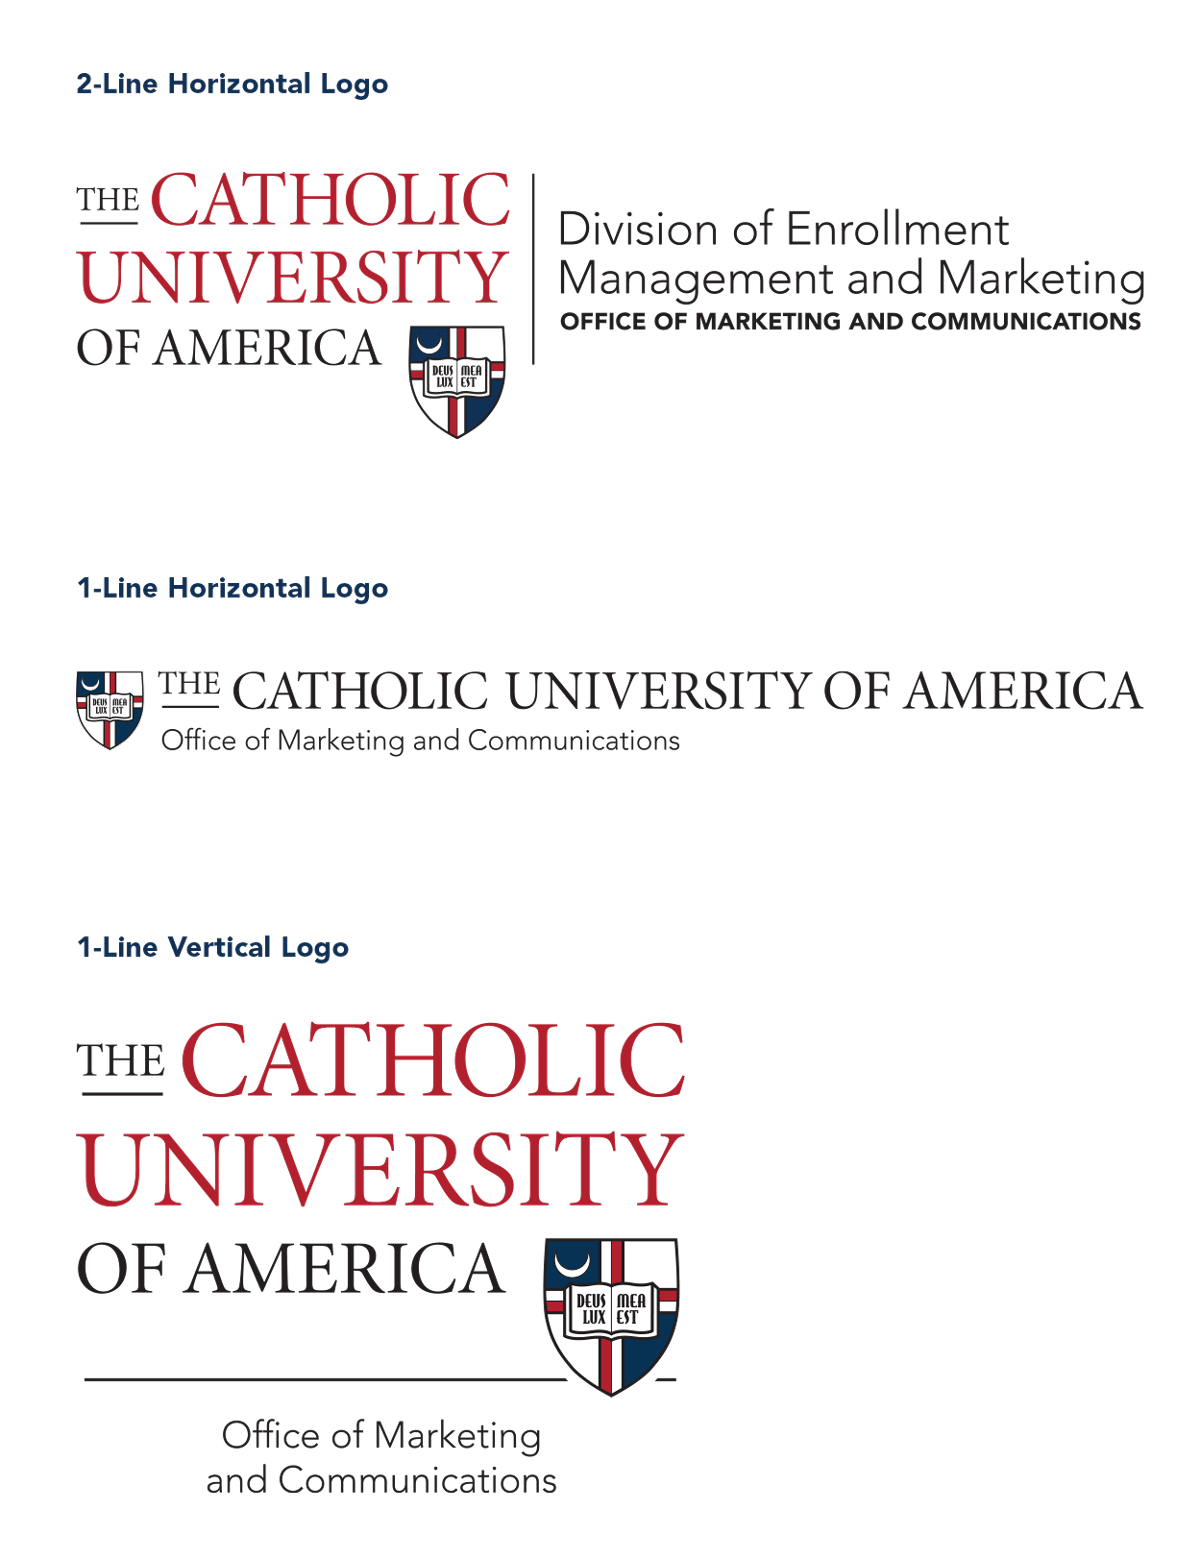 University Identity - secondary logos